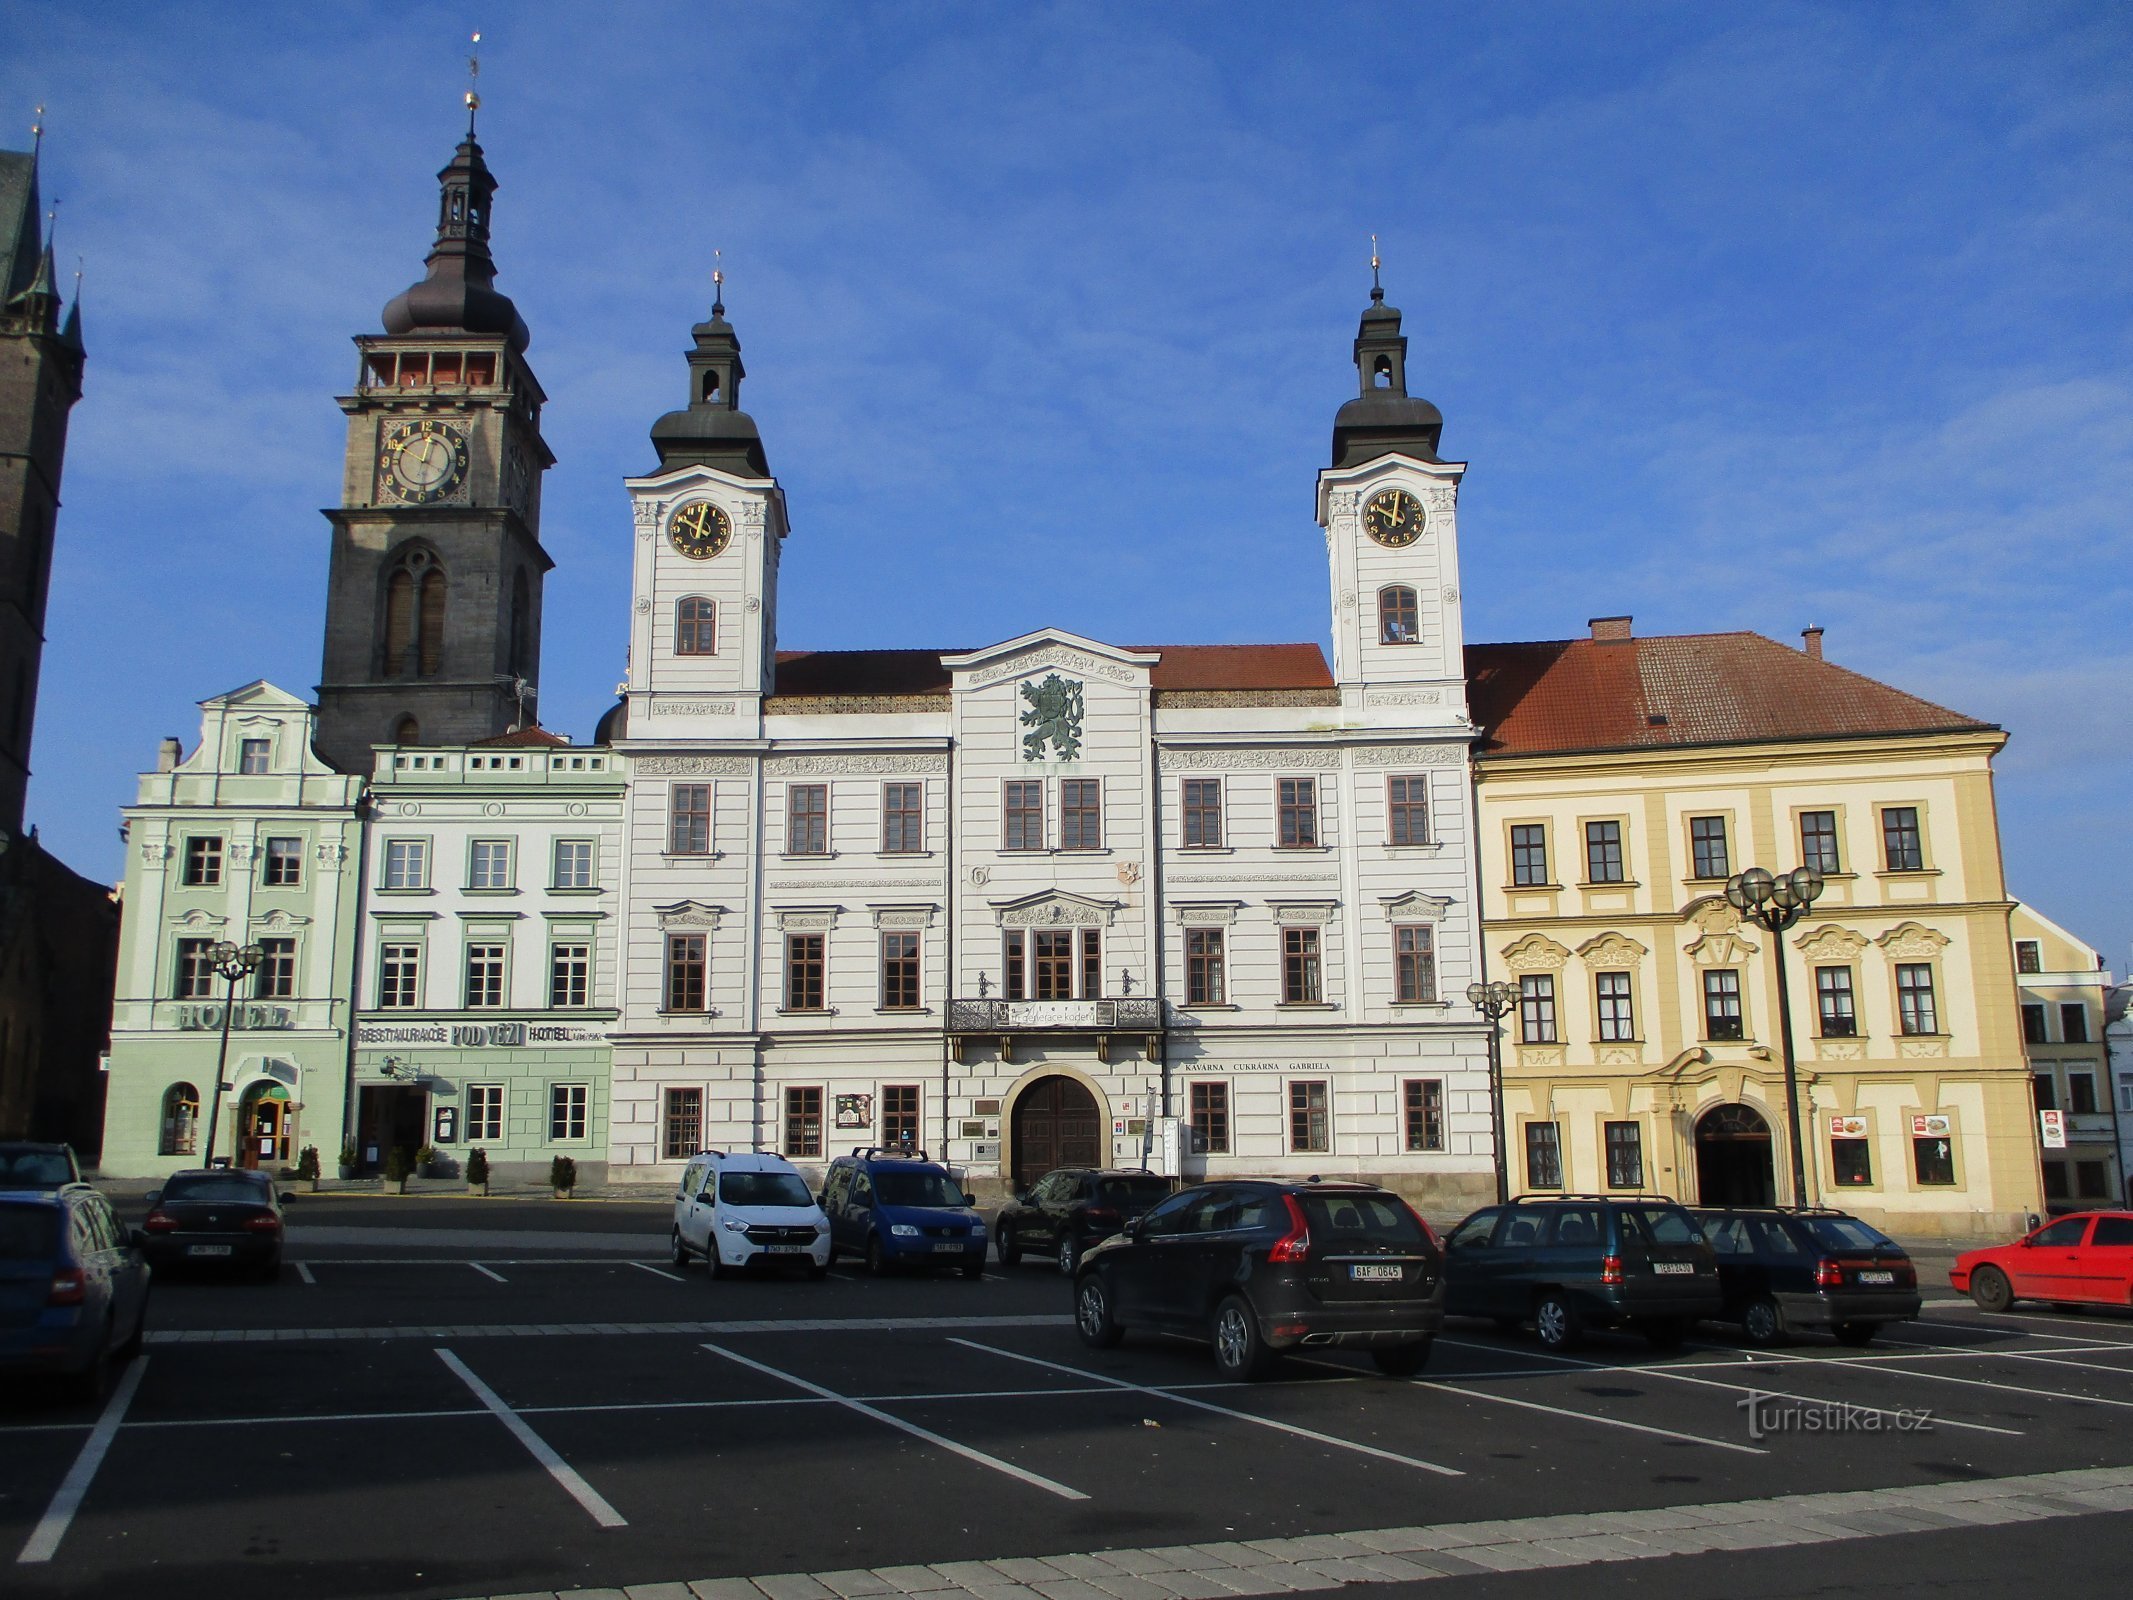 Velké náměstí 的西排房屋（Hradec Králové，9.2.2020 年 XNUMX 月 XNUMX 日）